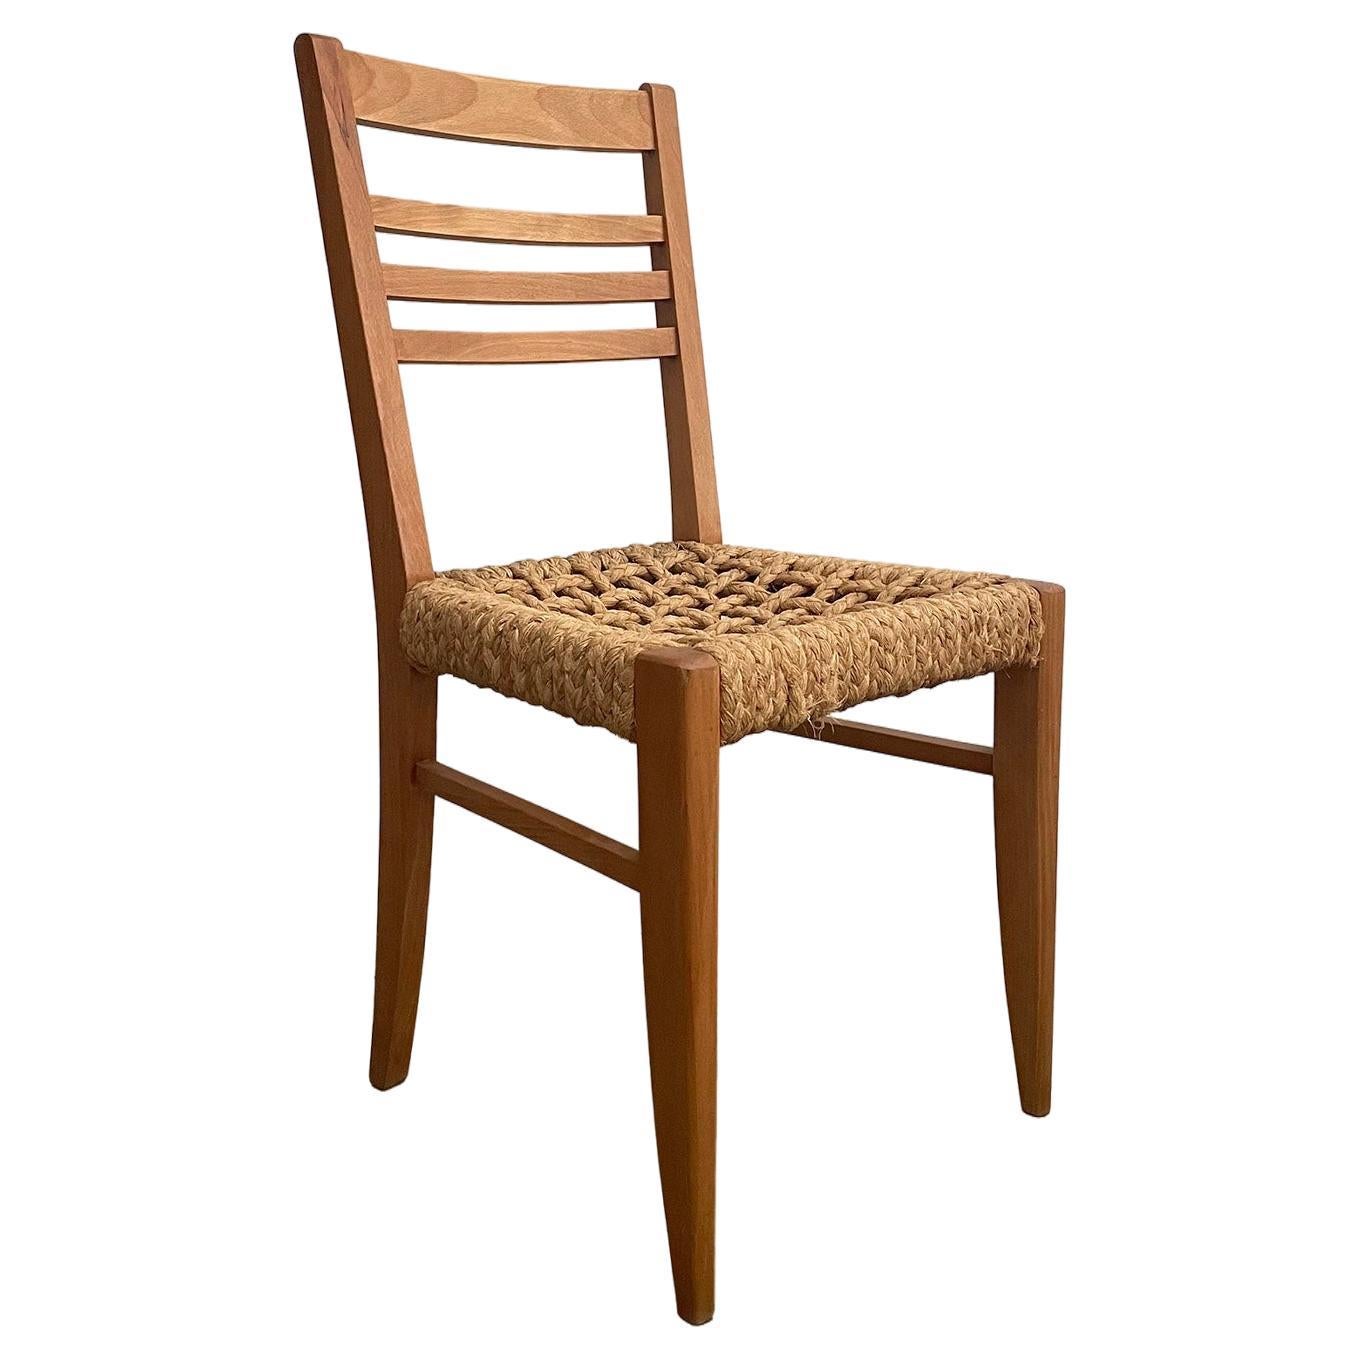  Audoux Minet Französisch Oak & Rope Side Chair 